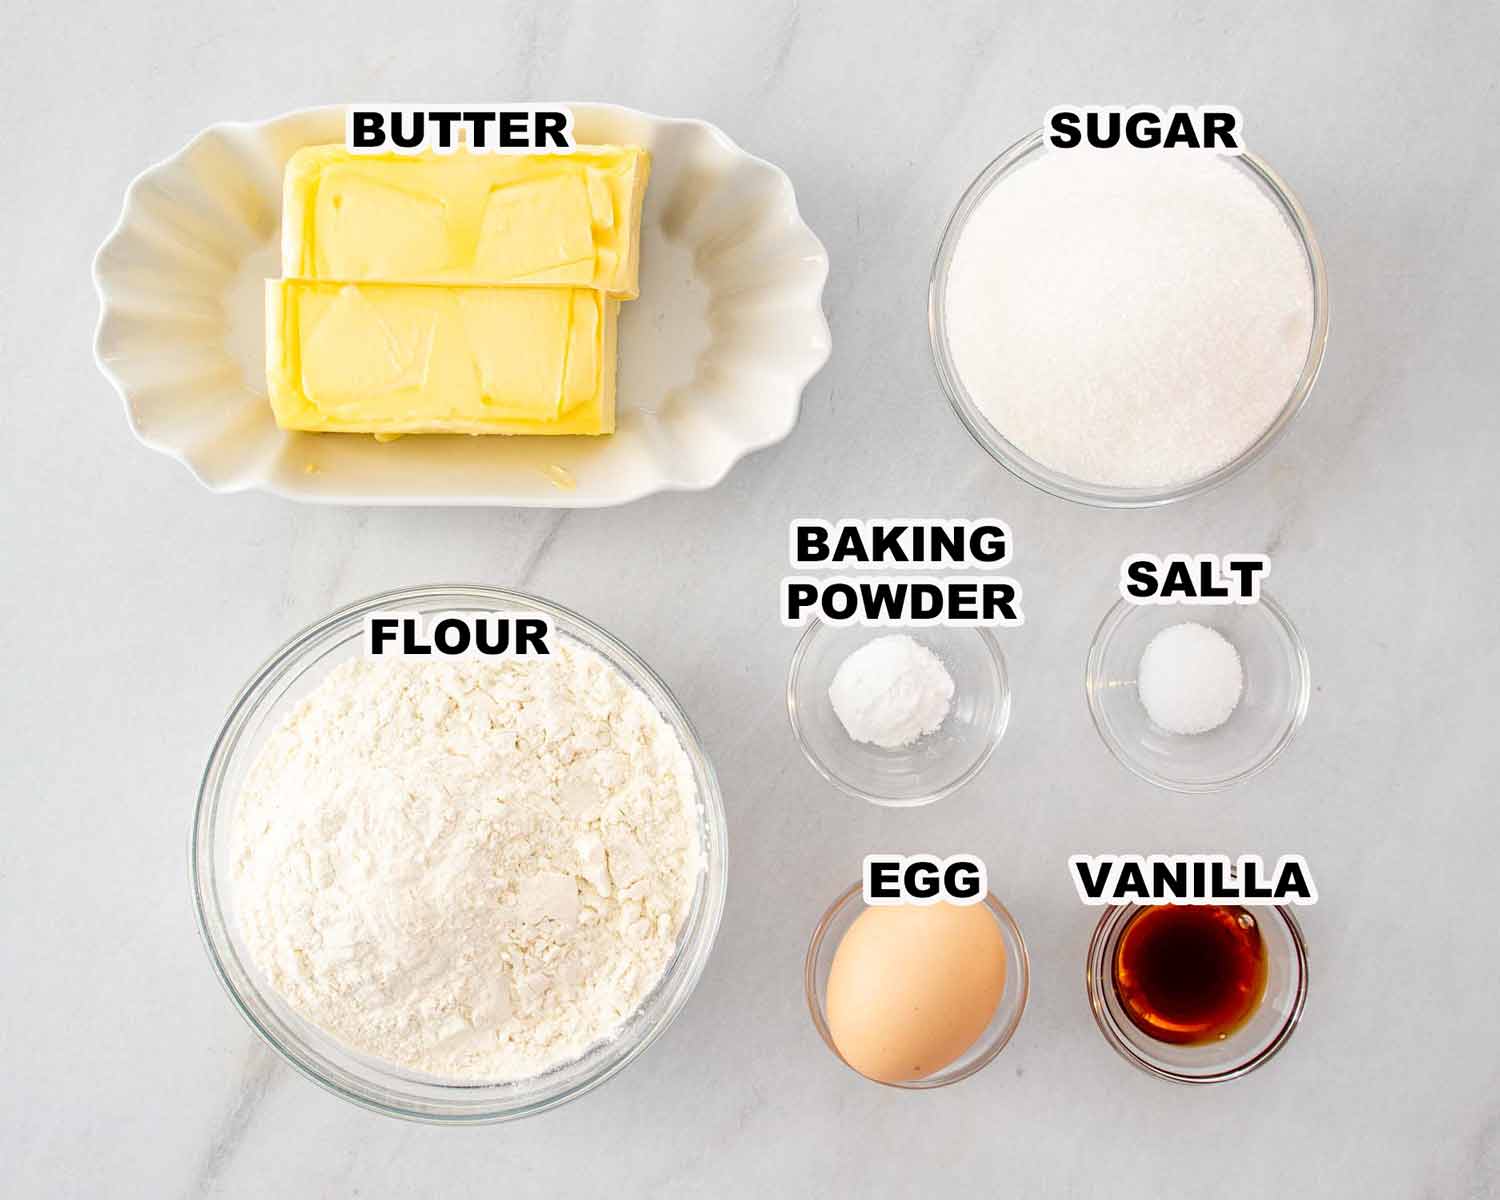 ingredients needed to make butter cookies.